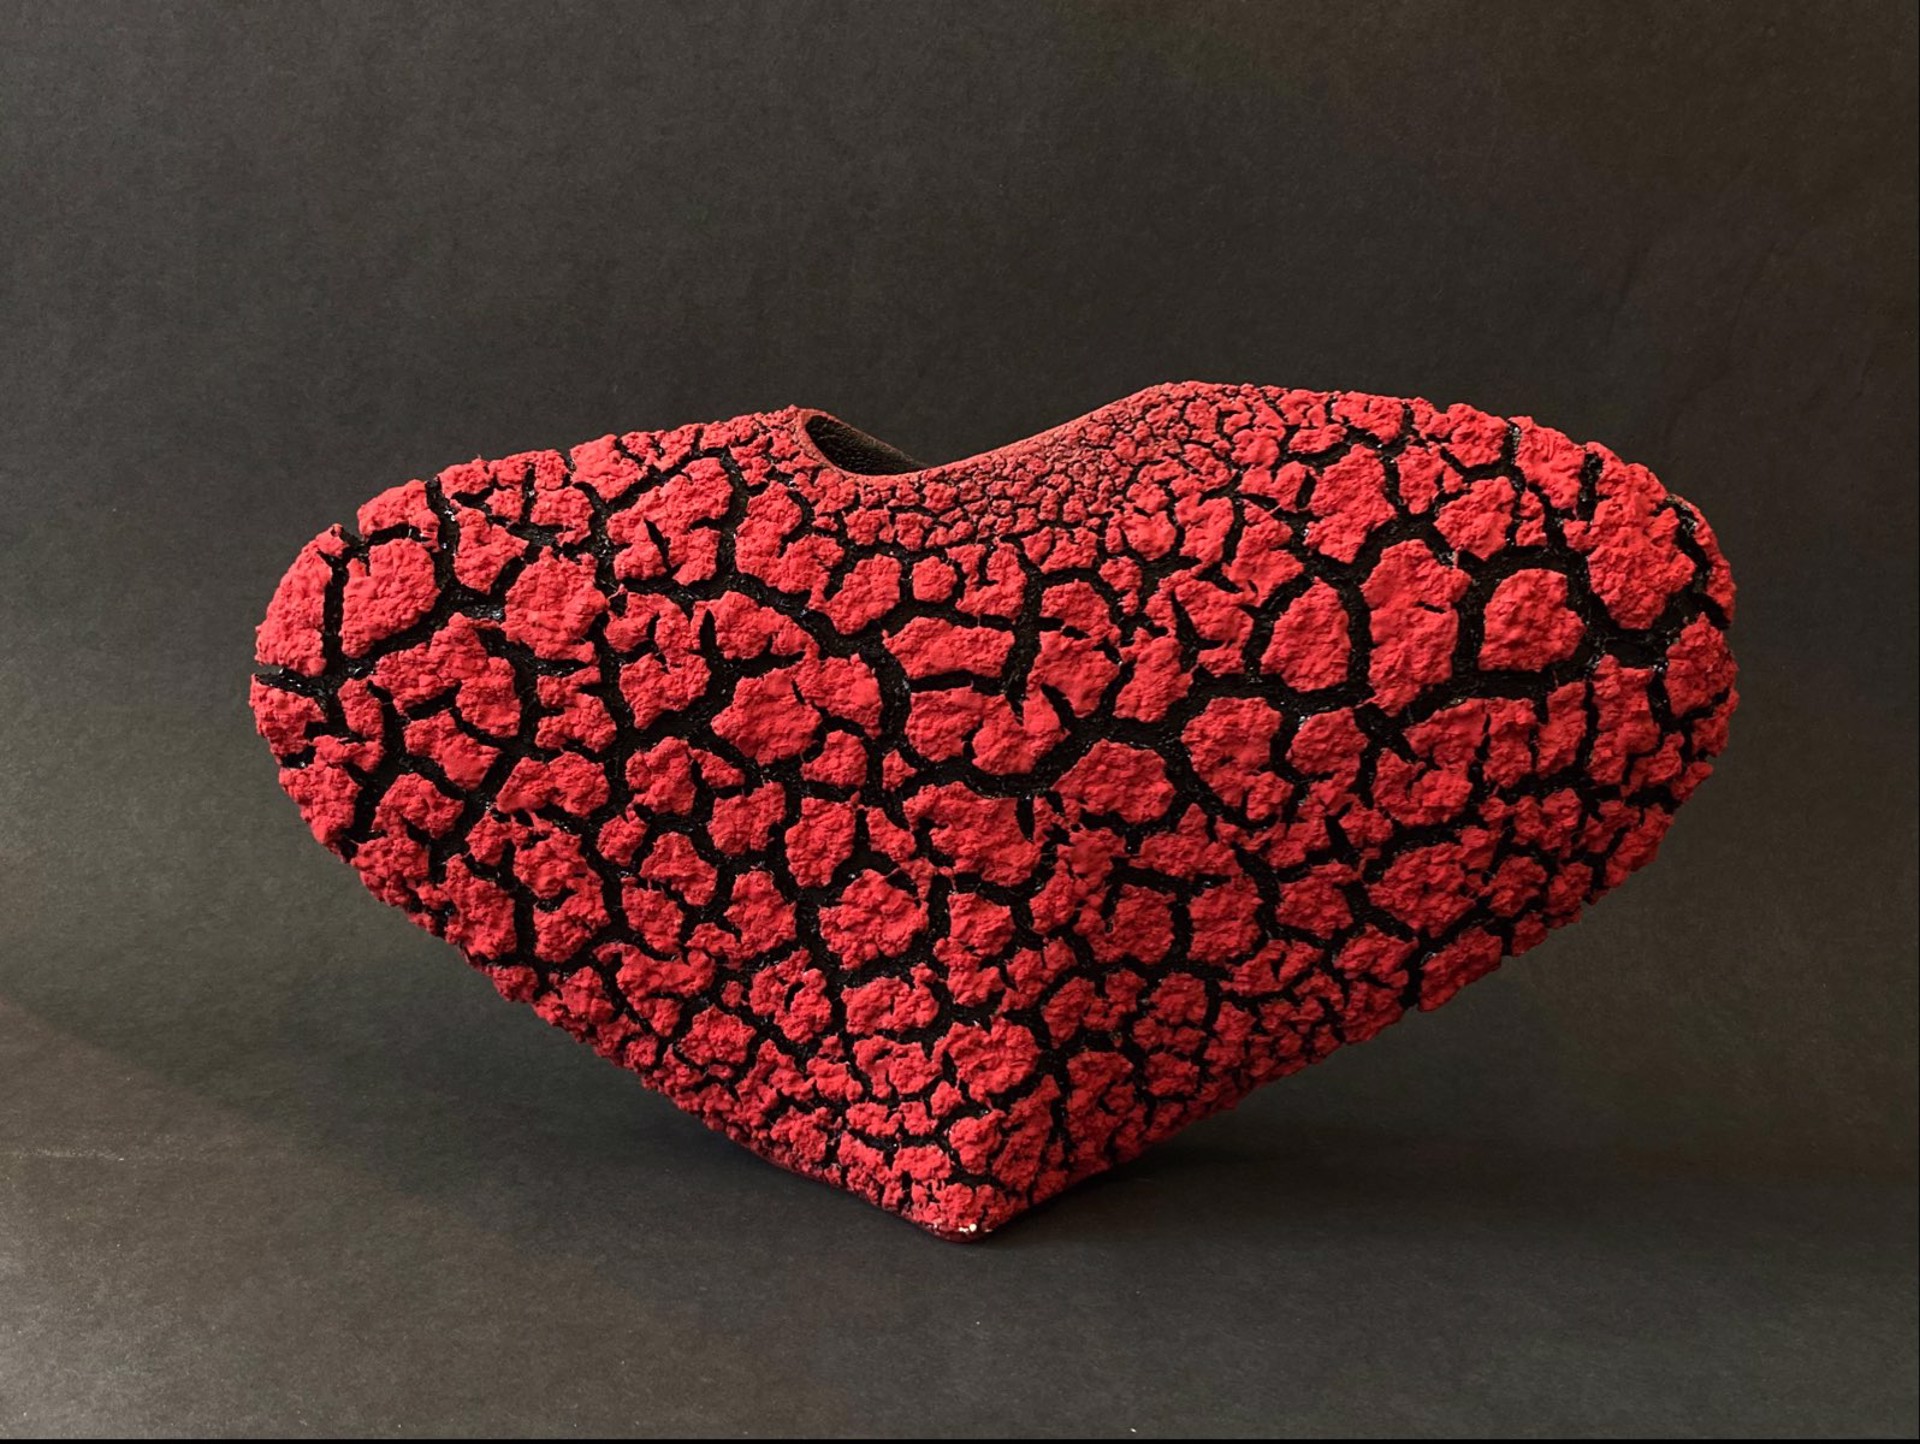 Red Pategonia Vase # 129 by Randy O' Brien